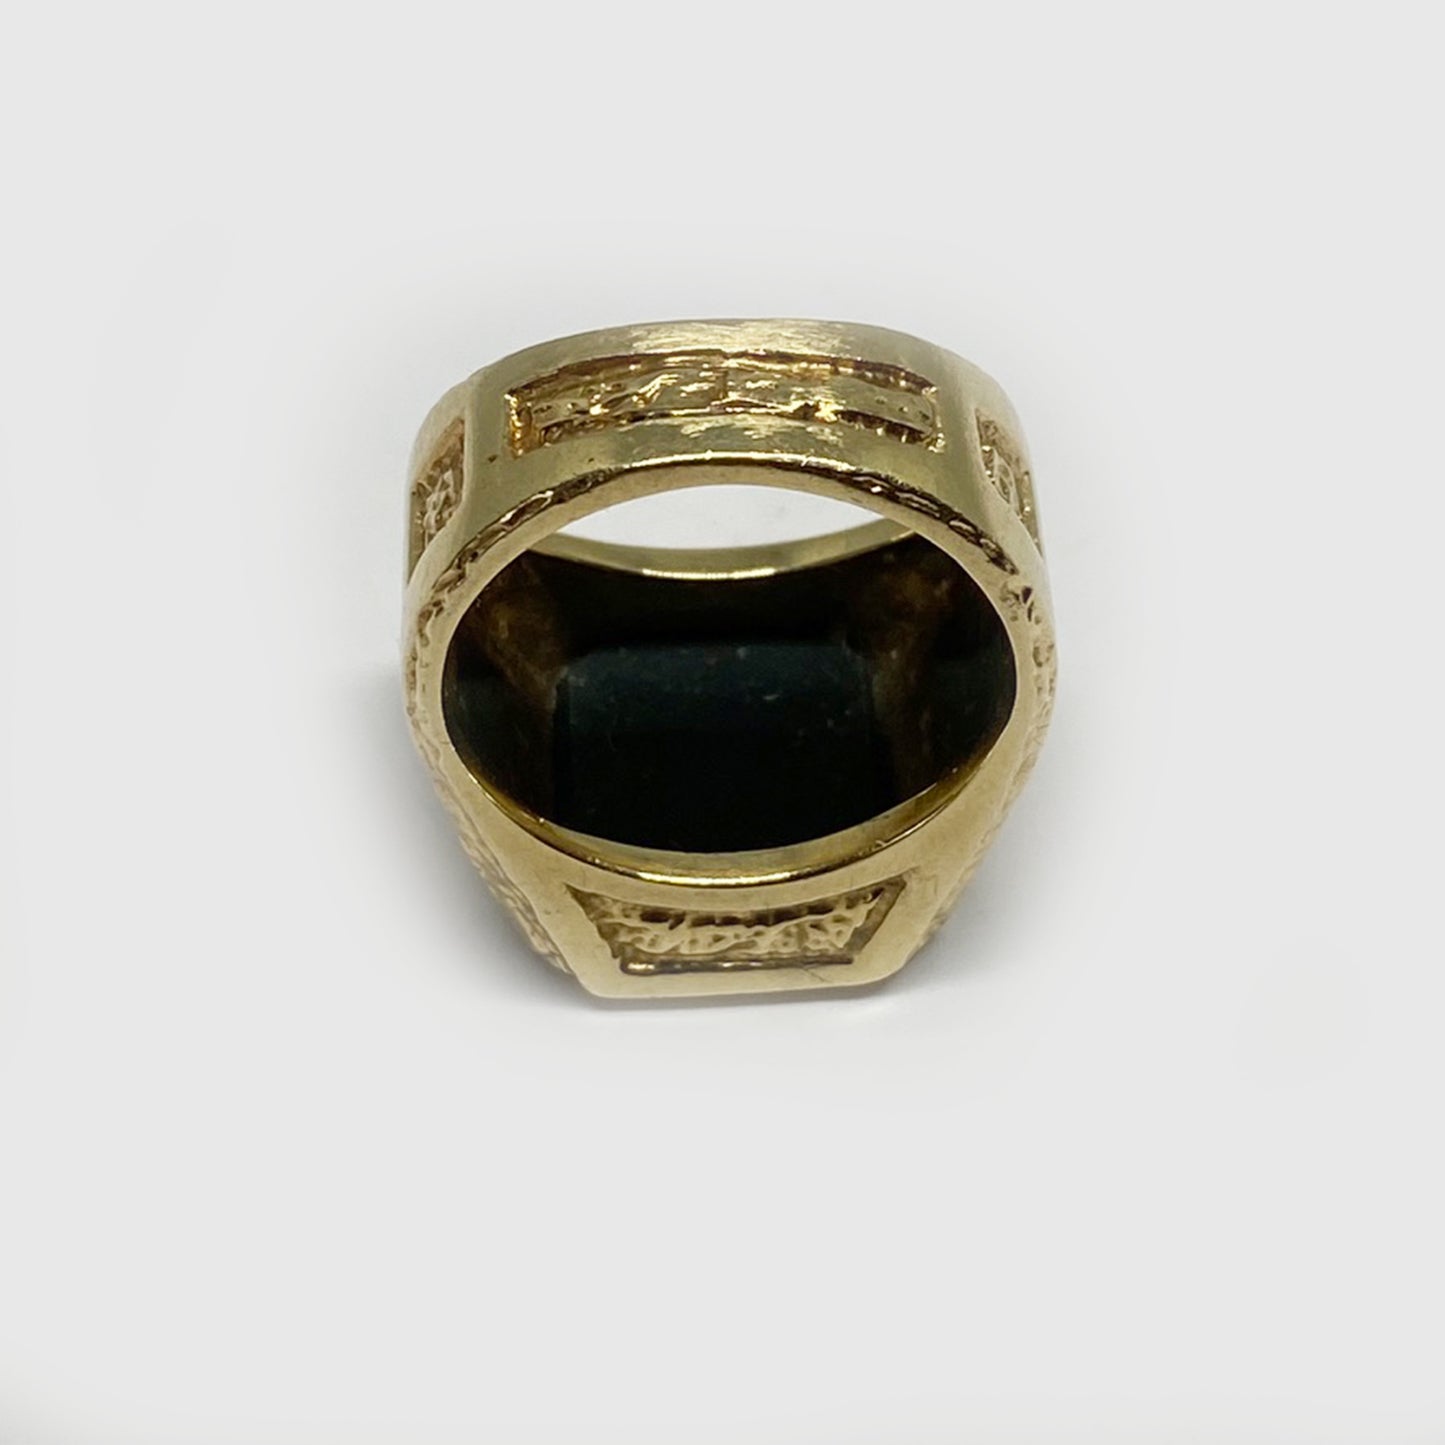 Antique 14k Gold Intaglio Ring, Heraldic Coat Of Arms Motto, Blood Stone Signet Ring